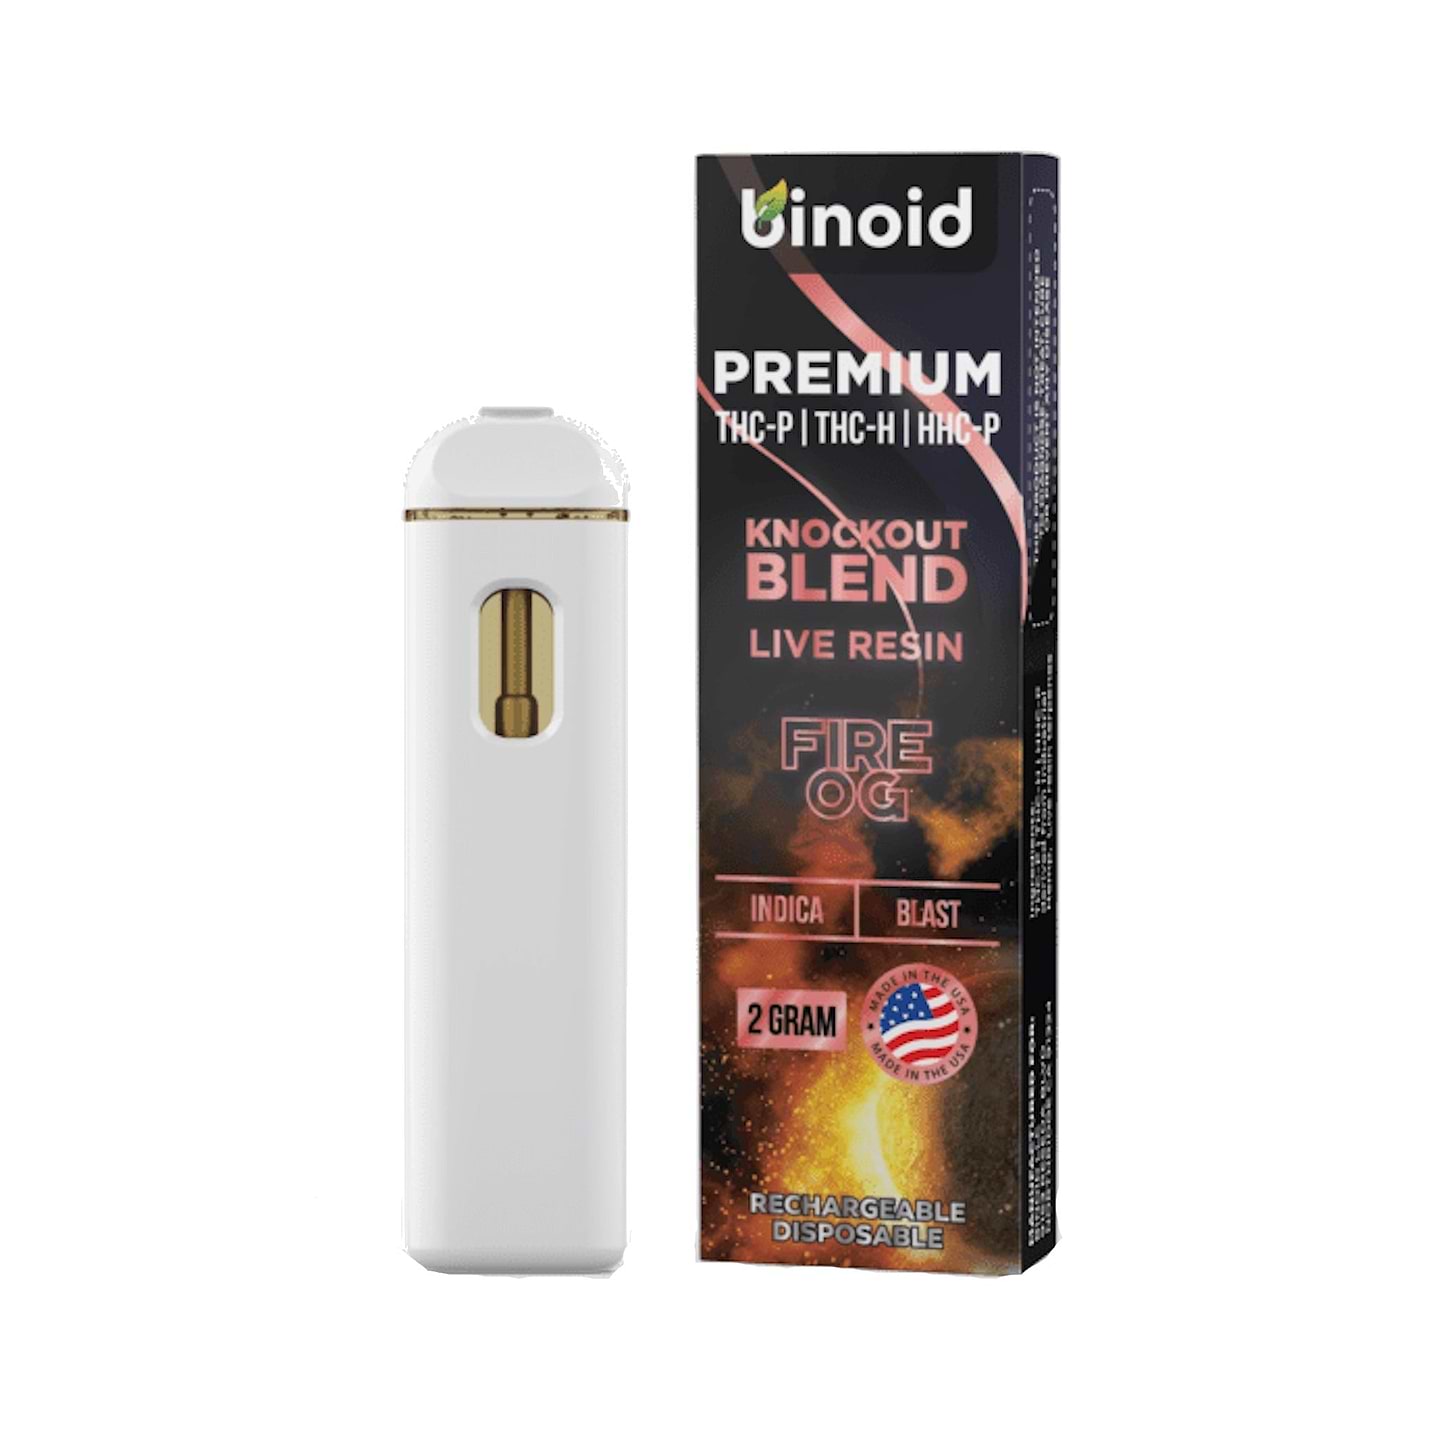 Binoid Knockout Blend Vaporizer - 2000mg